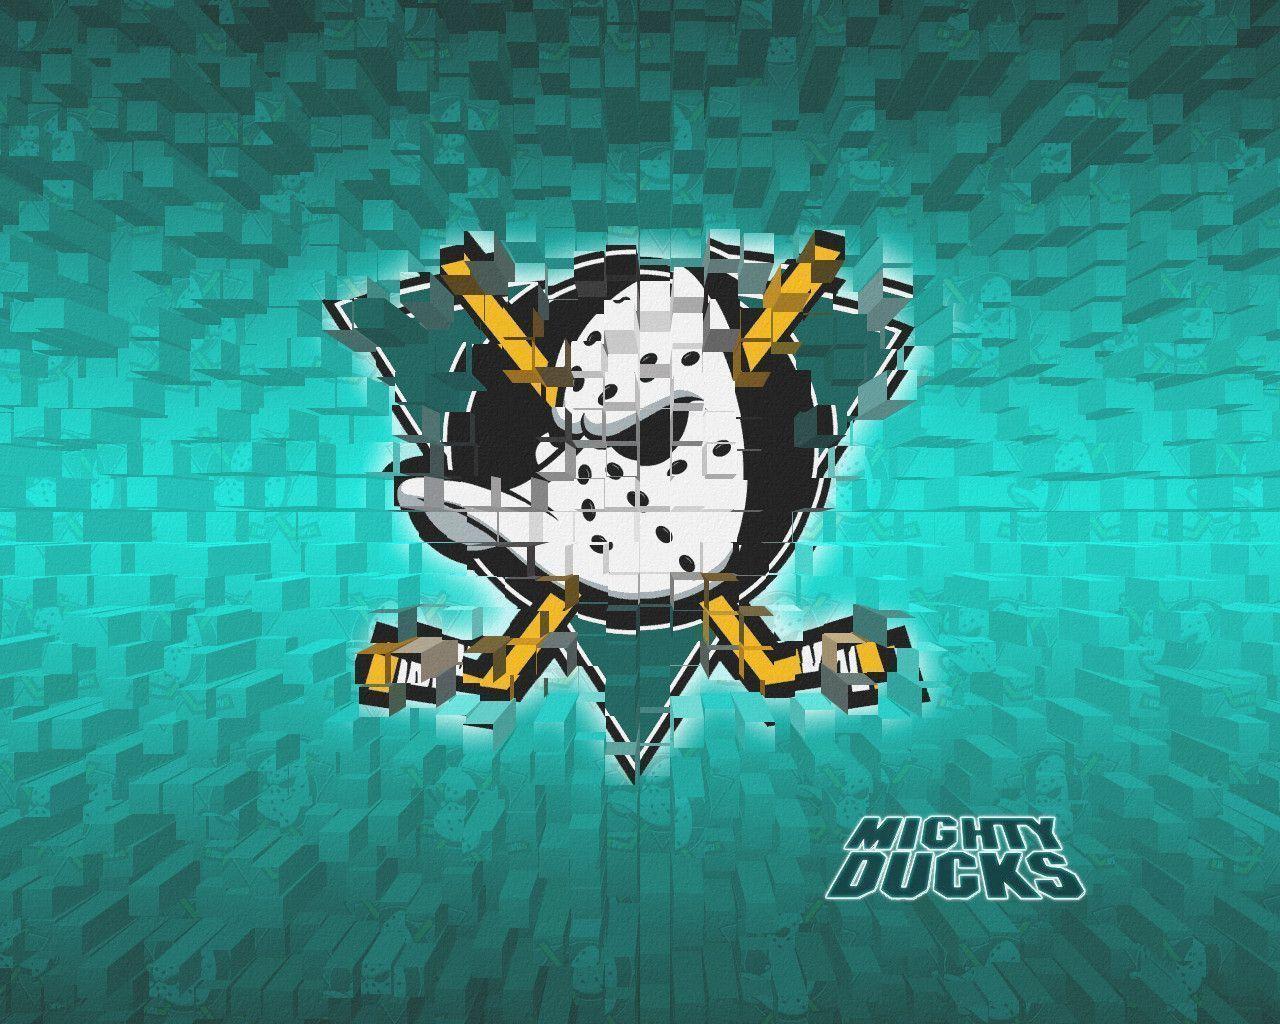 Disney's The Mighty Ducks  Duck wallpaper, Duck pictures, D2 the